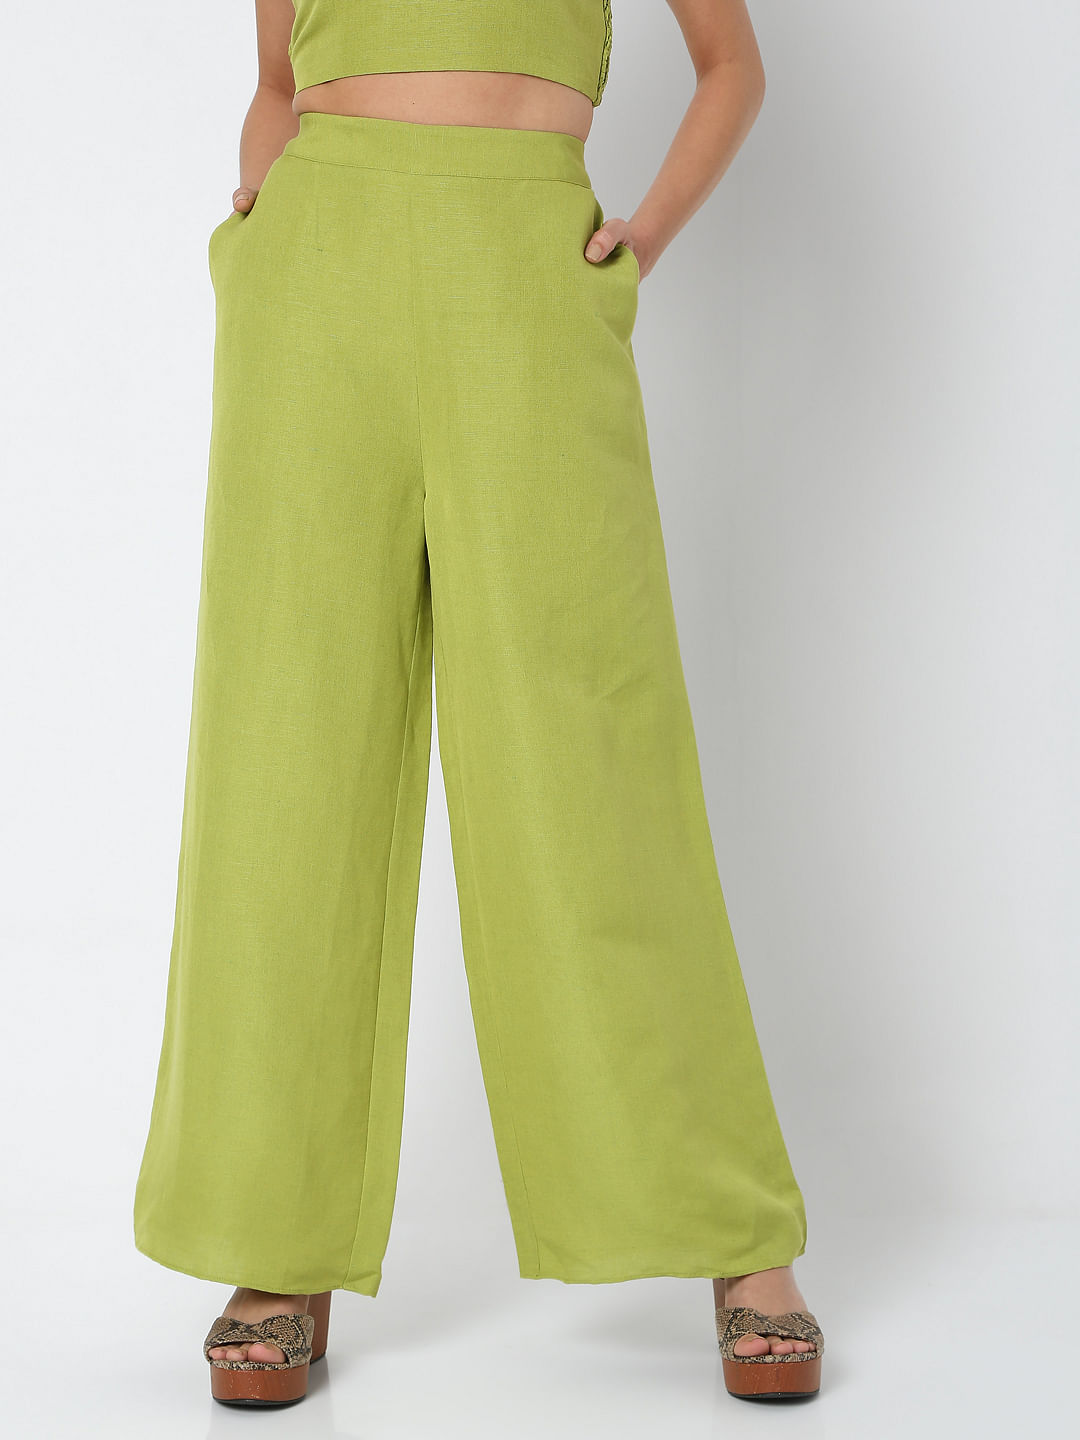 Buy Fashionoliq Women Trouser High Rise Piped Dress Pants Green L at  Amazonin